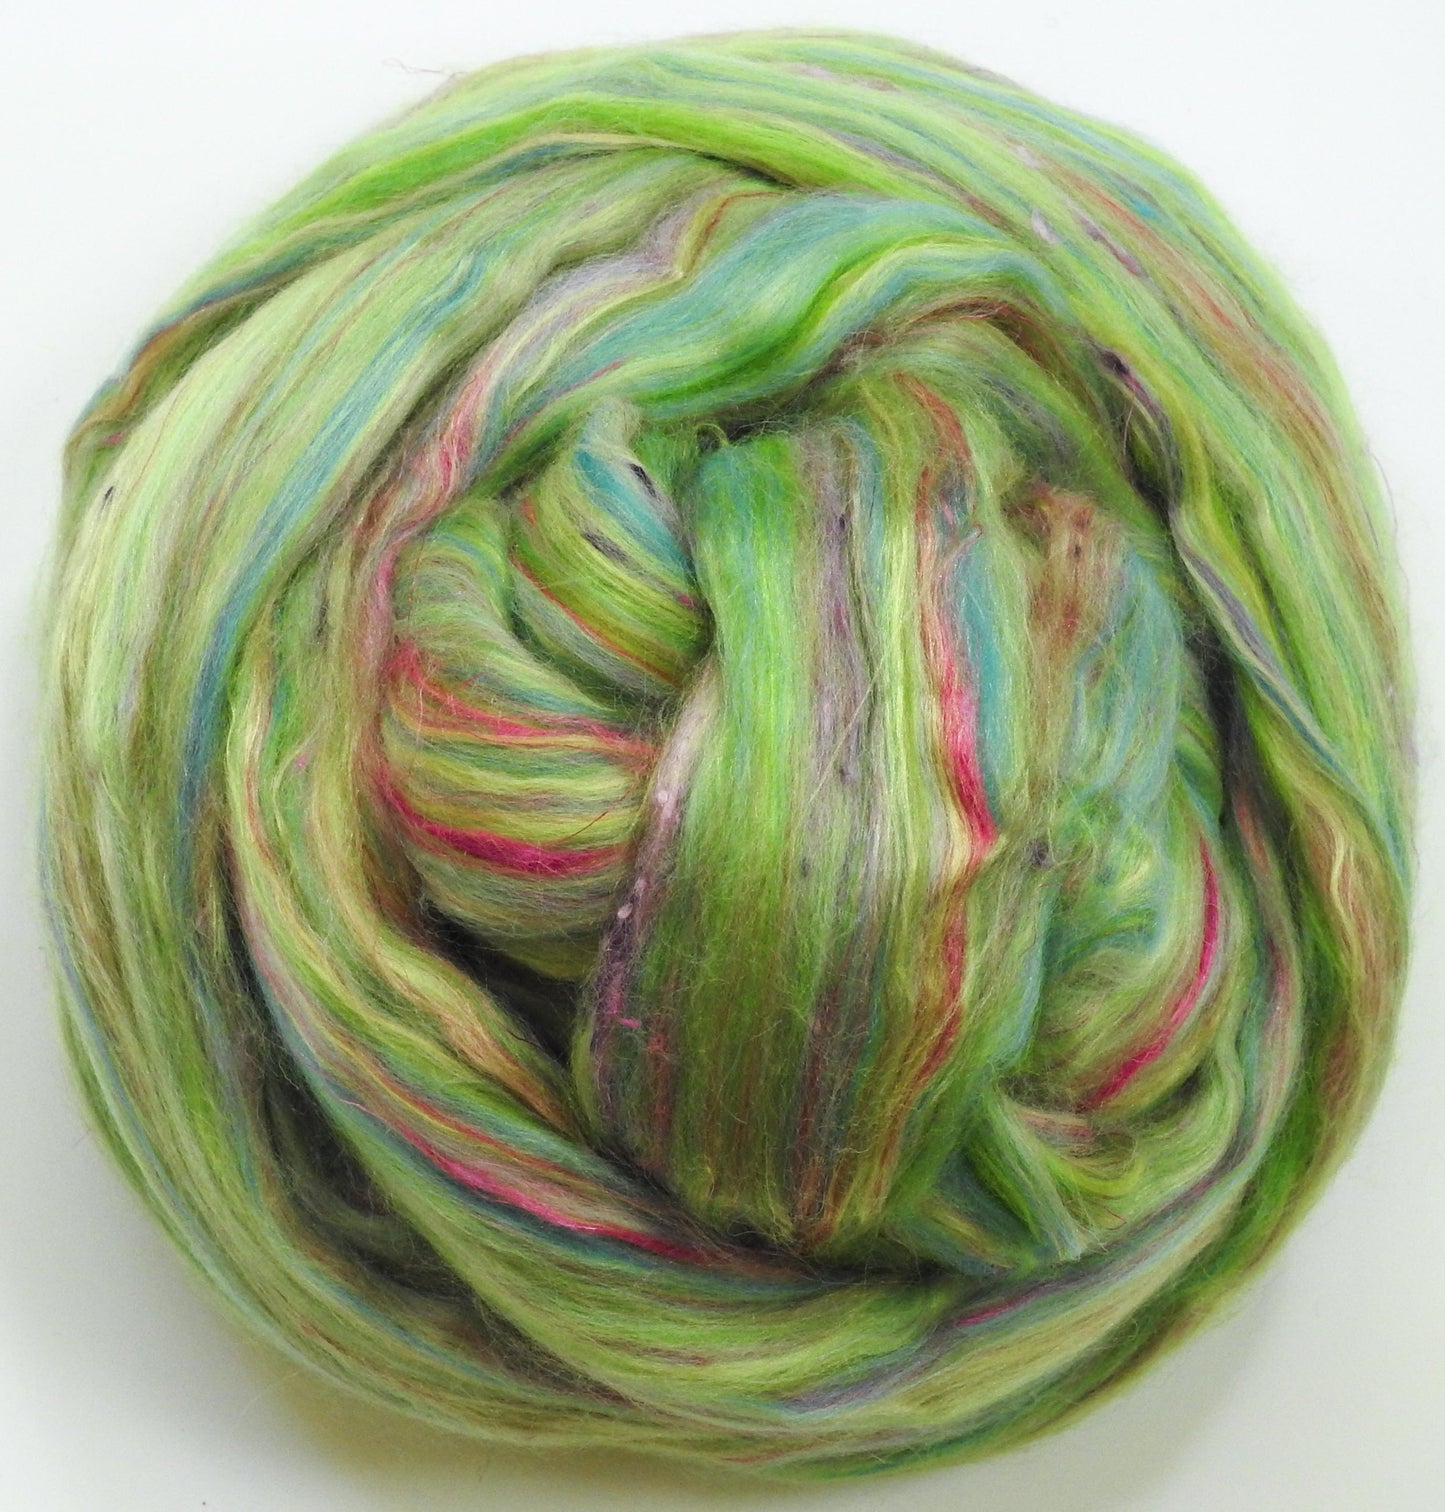 Leaf By Niggle - Merino/Mulberry silk/Tweed Blend /Flax (50/25/15/10)